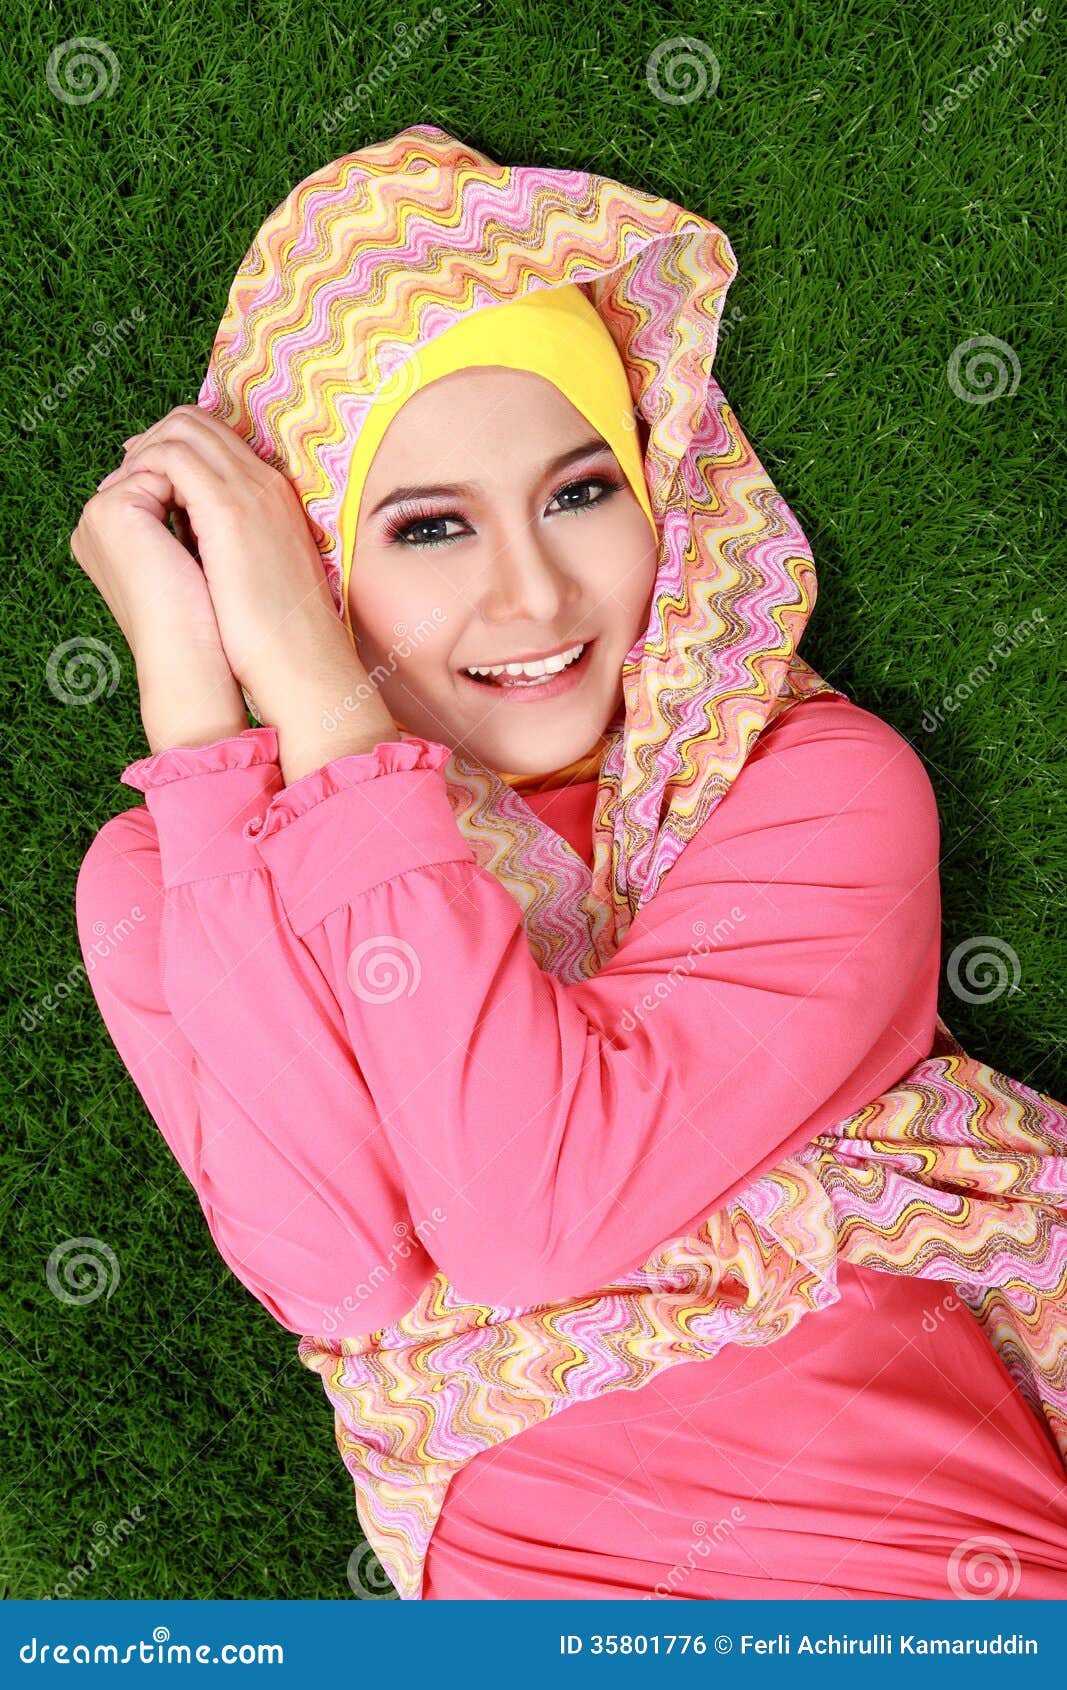 Girls wearing hijab pics of women